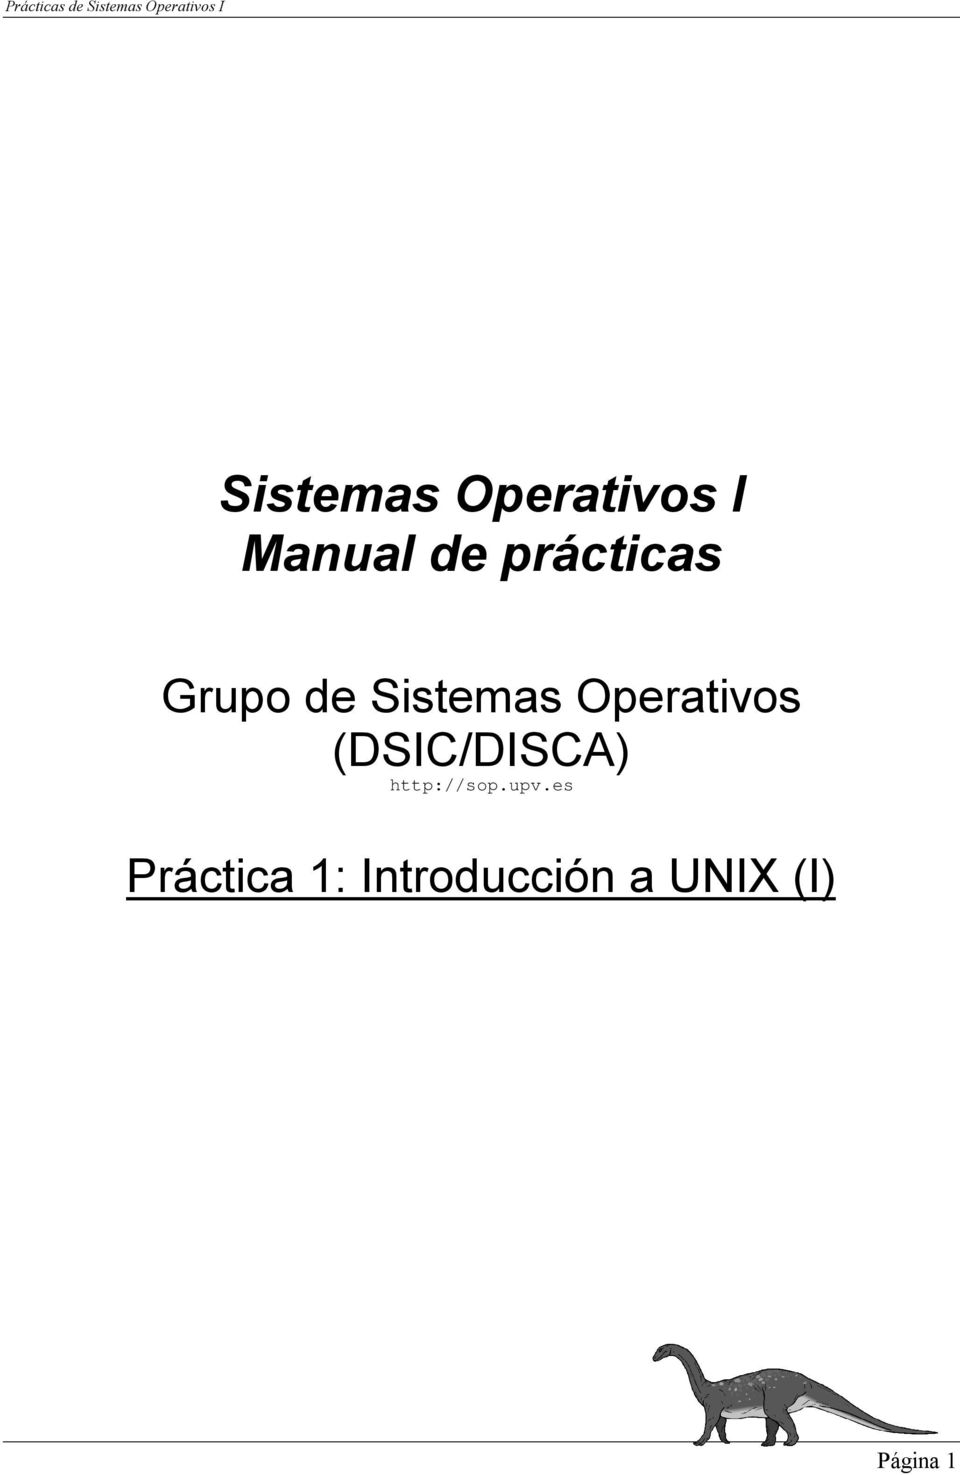 Operativos (DSIC/DISCA) http://sop.